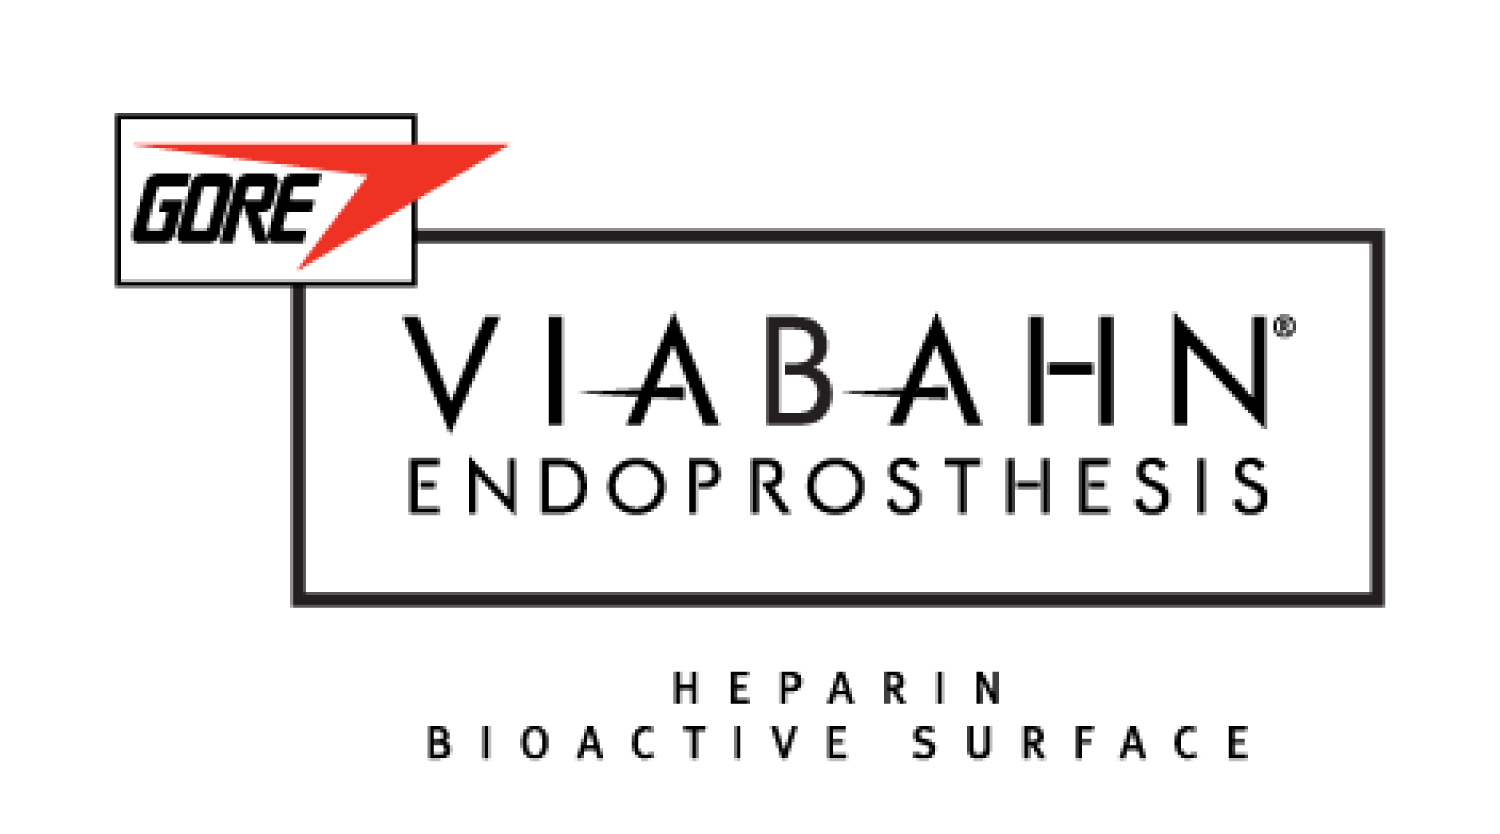 VIABAHN ENDOPROSTHESIS - HEPARIN BIOACTIVE SURFACE